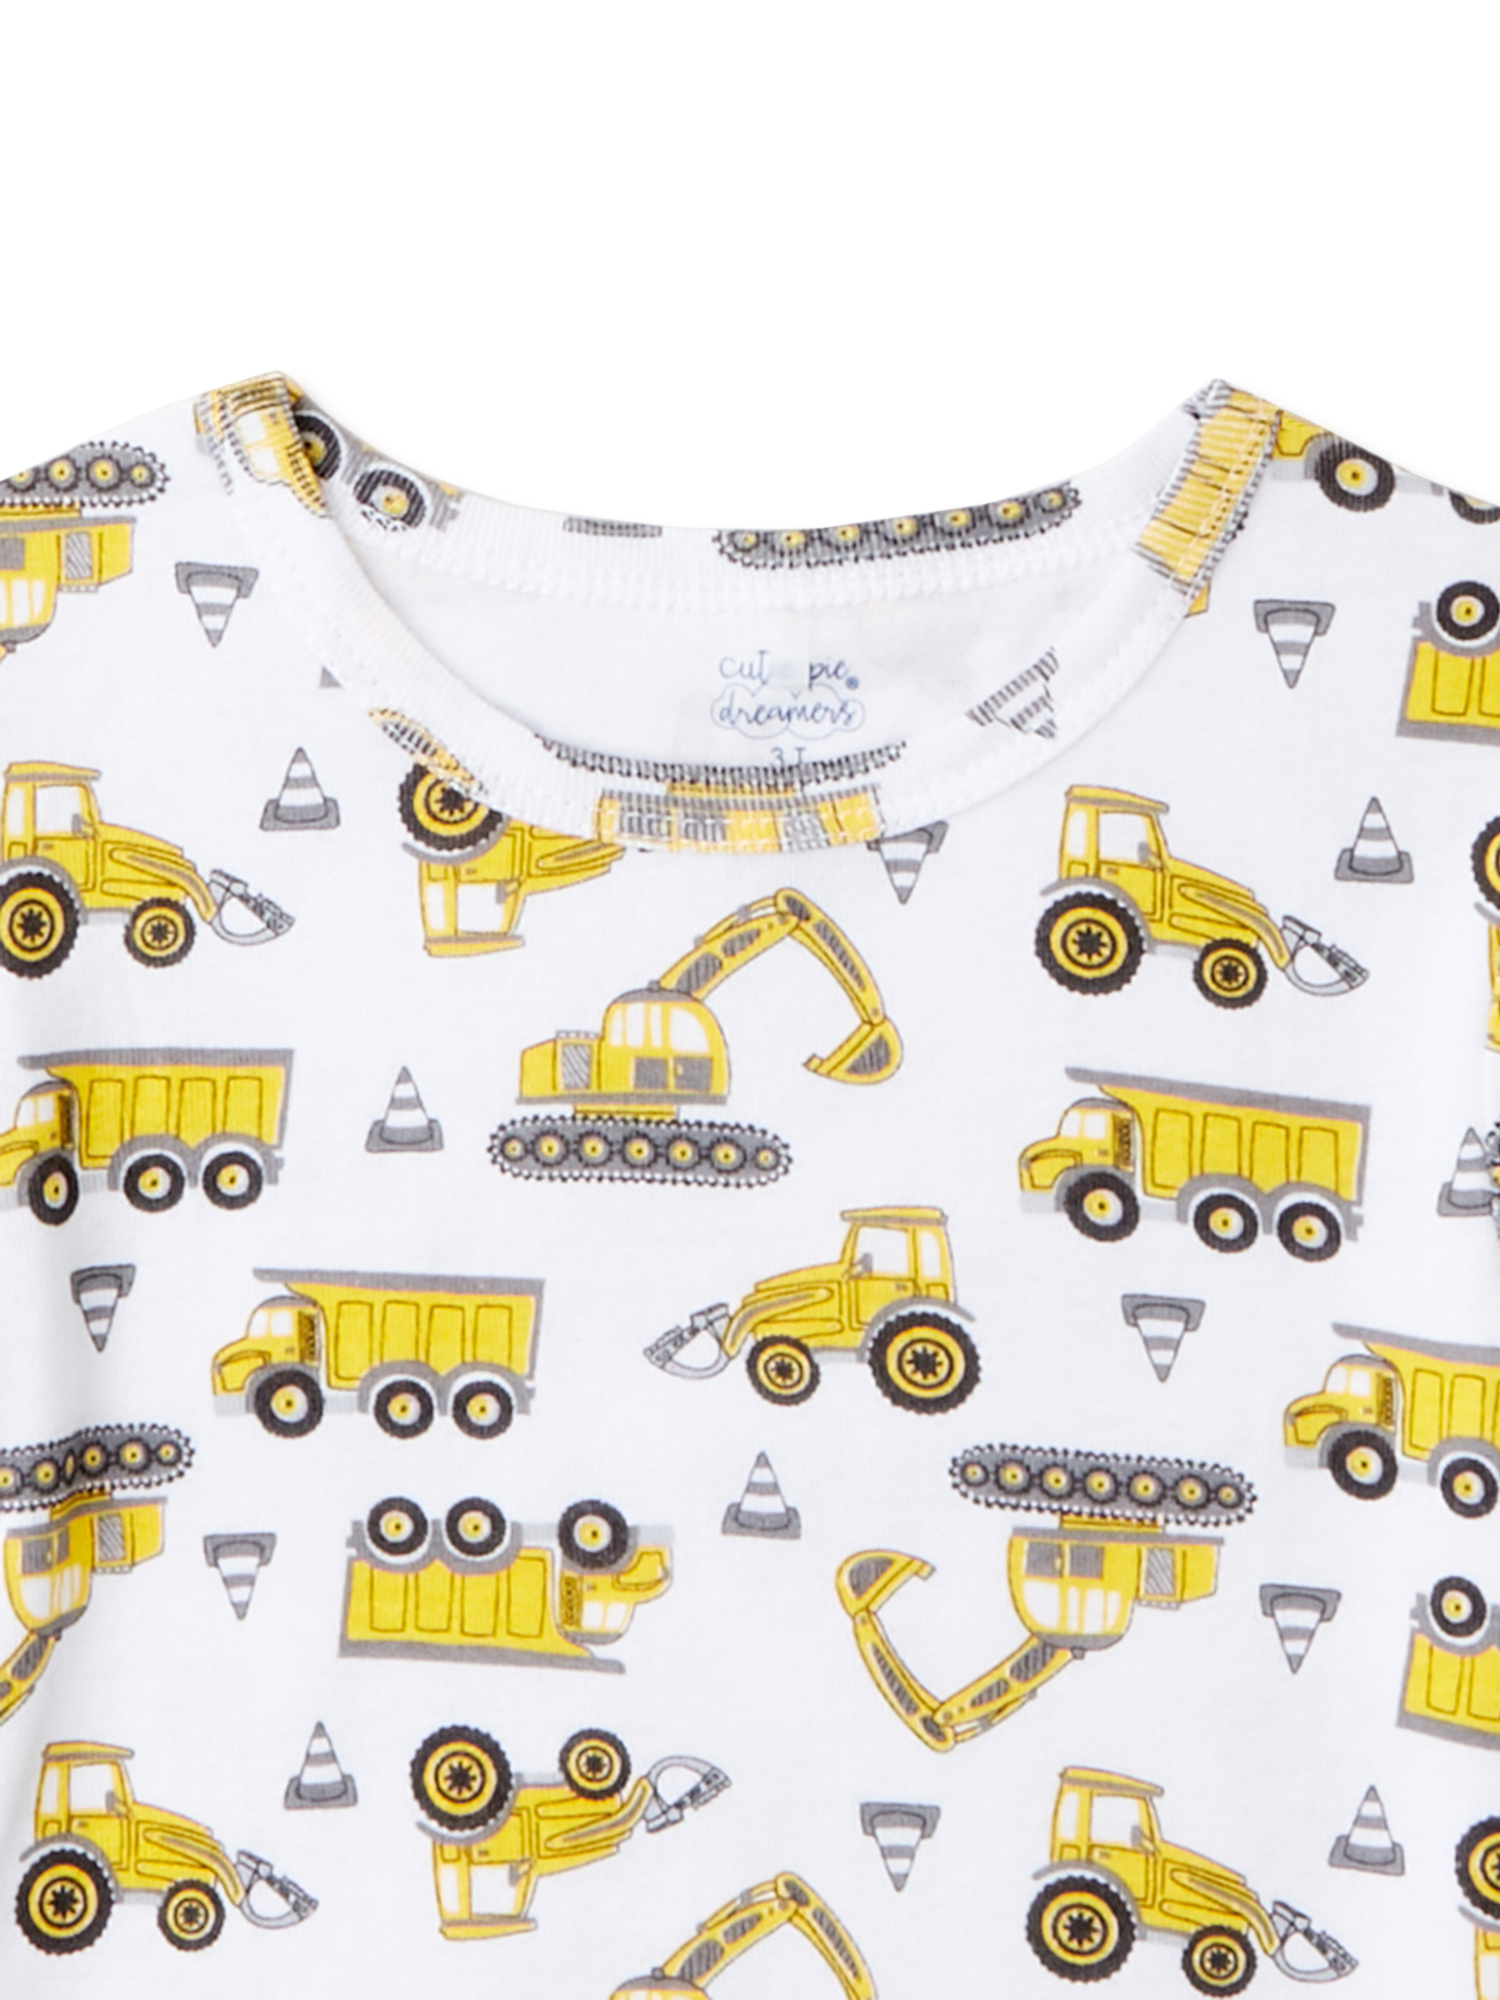 Cutie Pie Baby Toddler Boys Short & Long Sleeve Snug Fit Cotton Pajamas Set, 4-Piece, Size 12 Months-5T - image 4 of 4